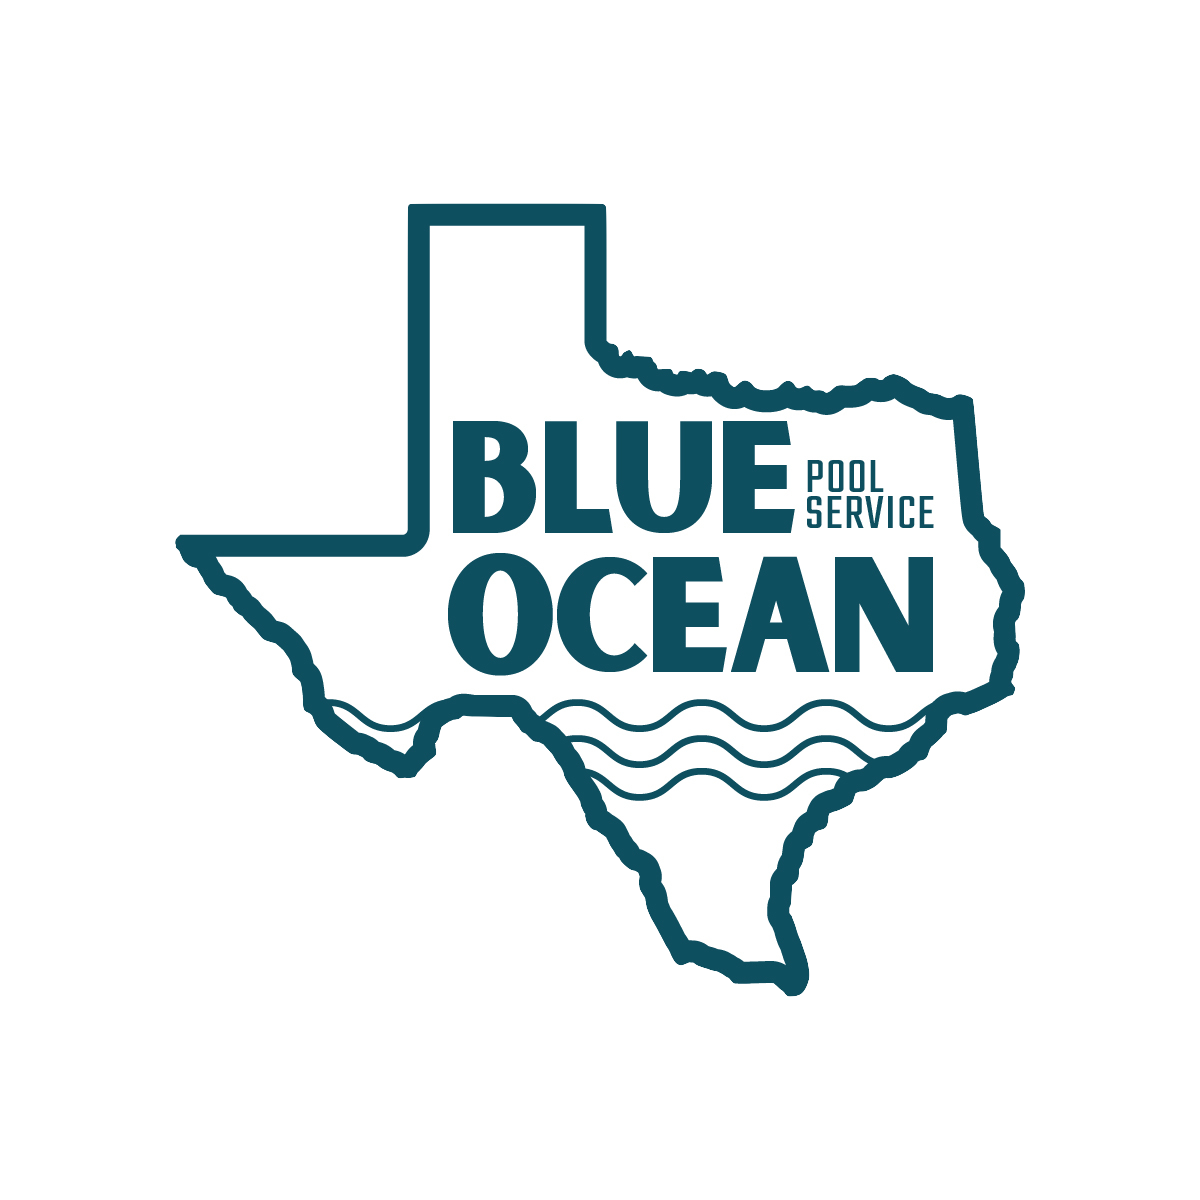 Blue Ocean Pool Services Logo